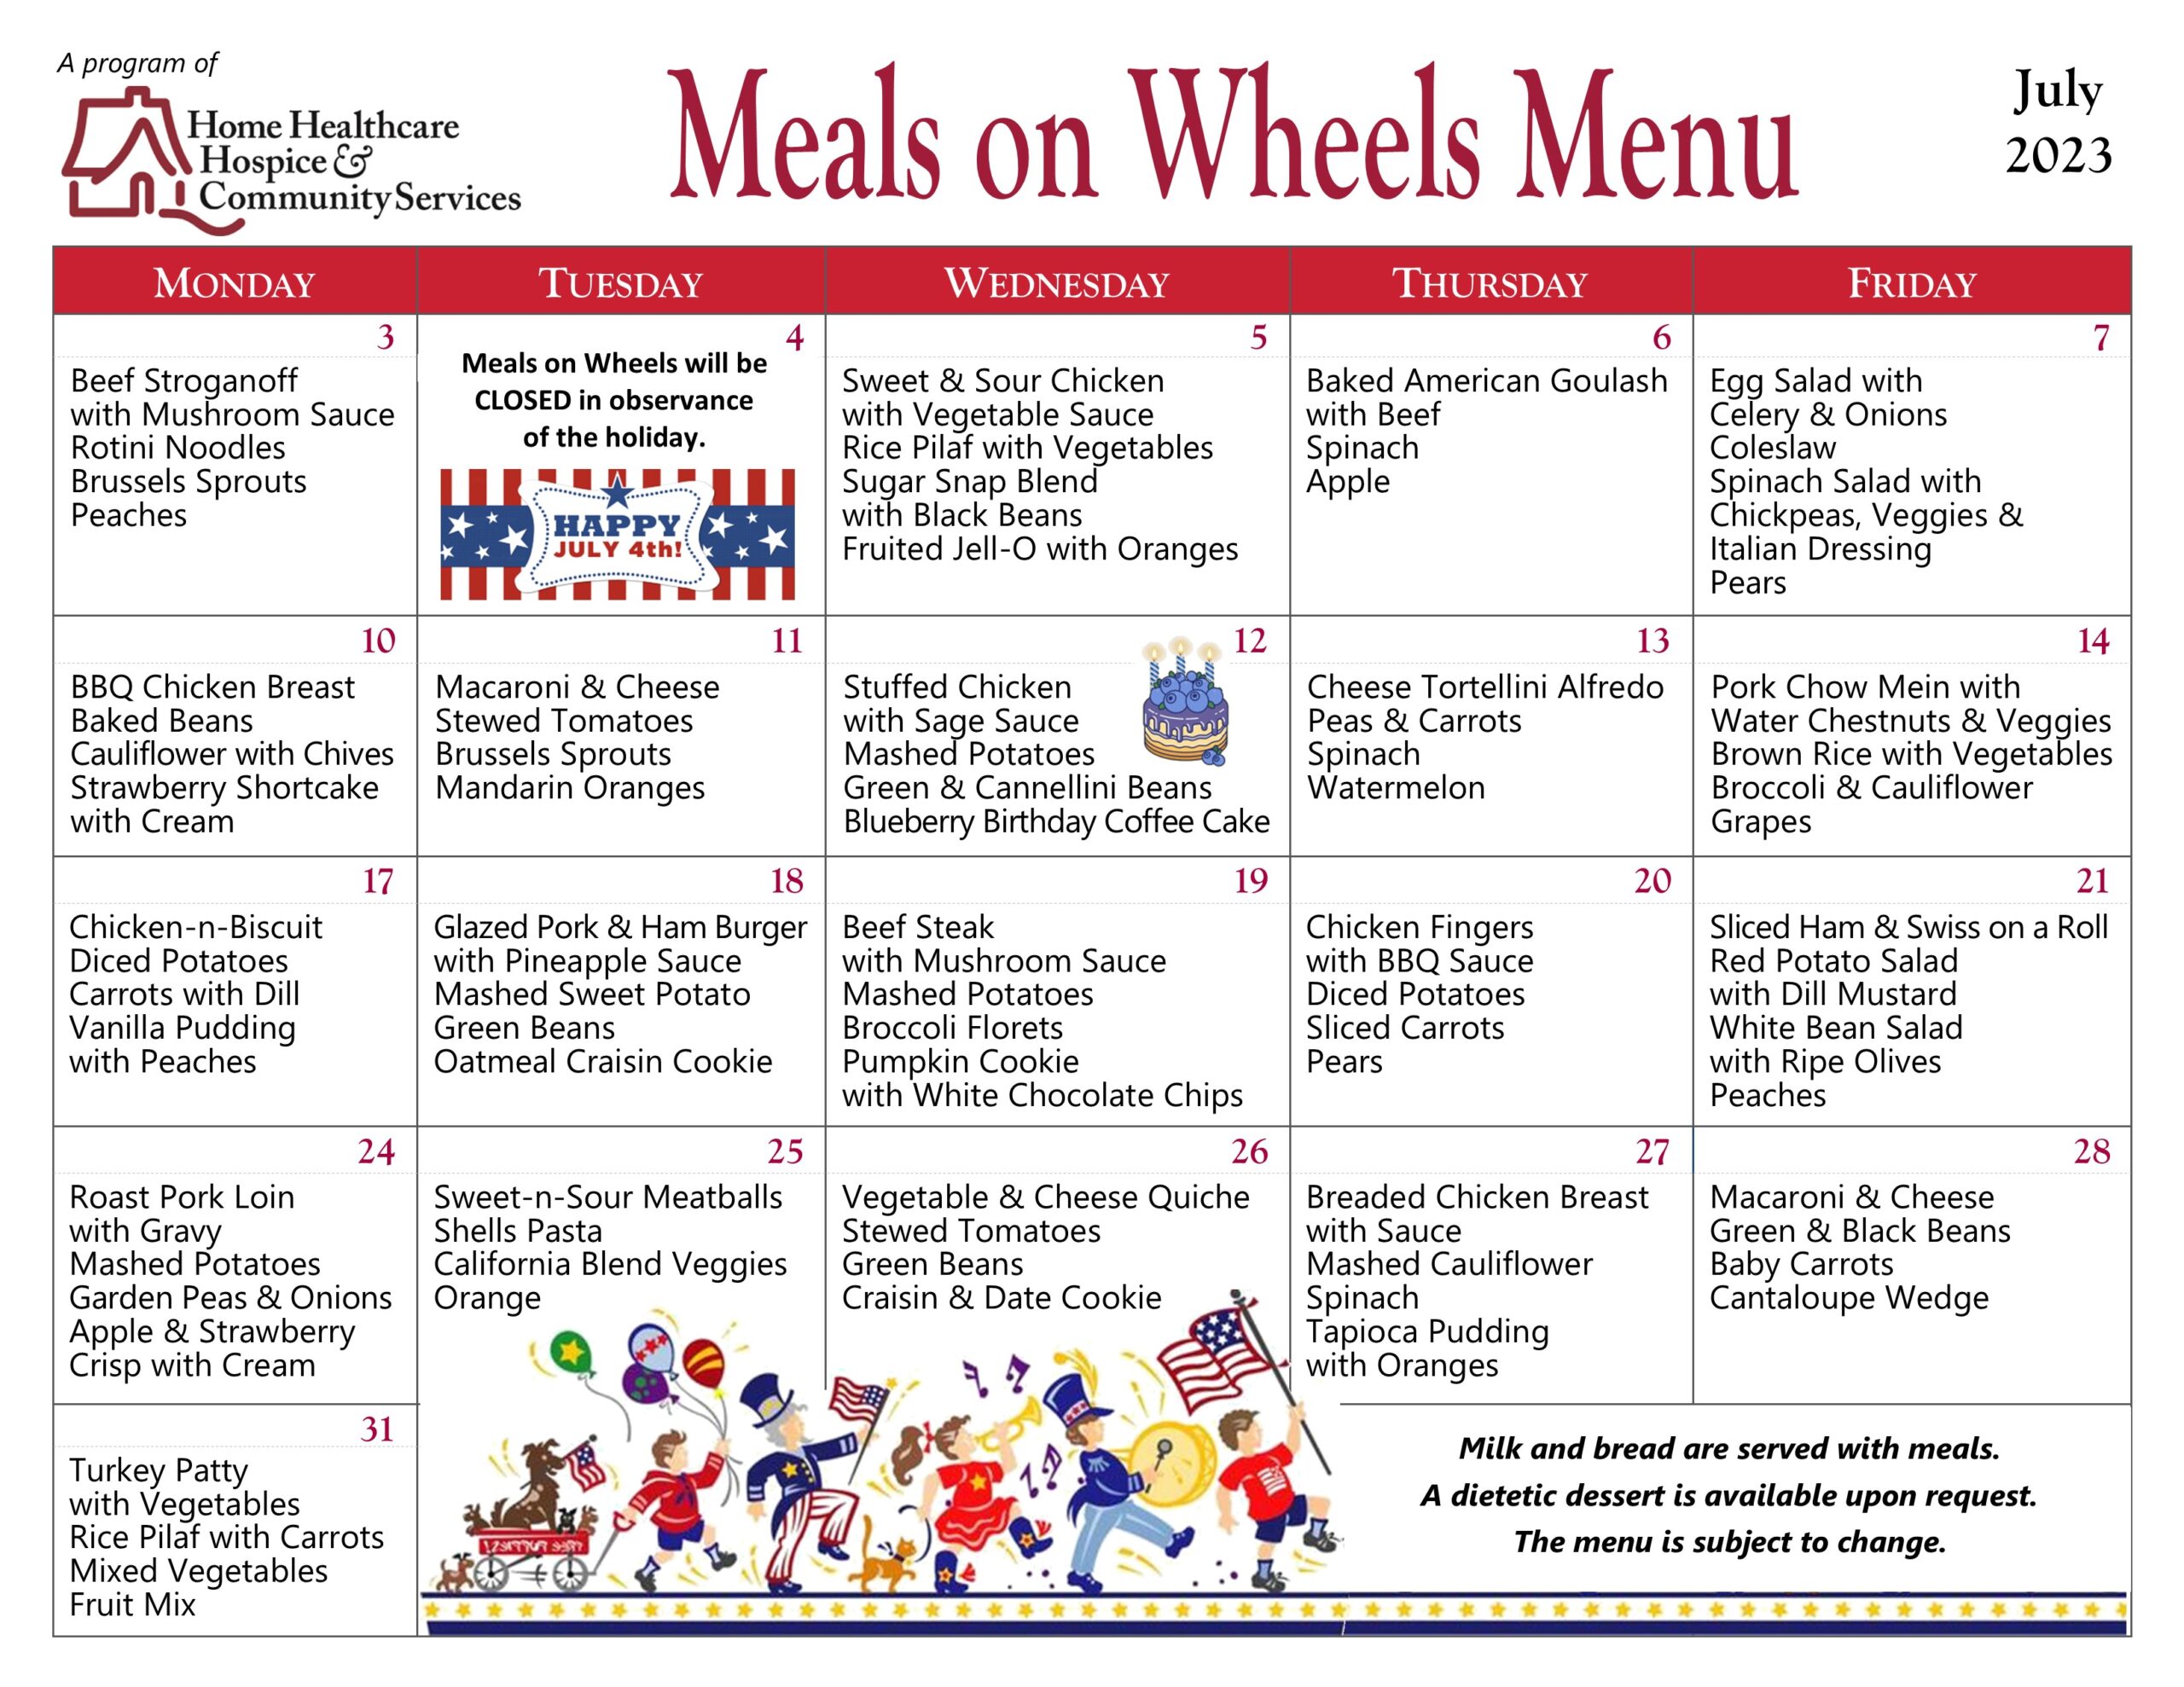 Meals On Wheels Menu July 2023 Home Healthcare, Hospice & Community